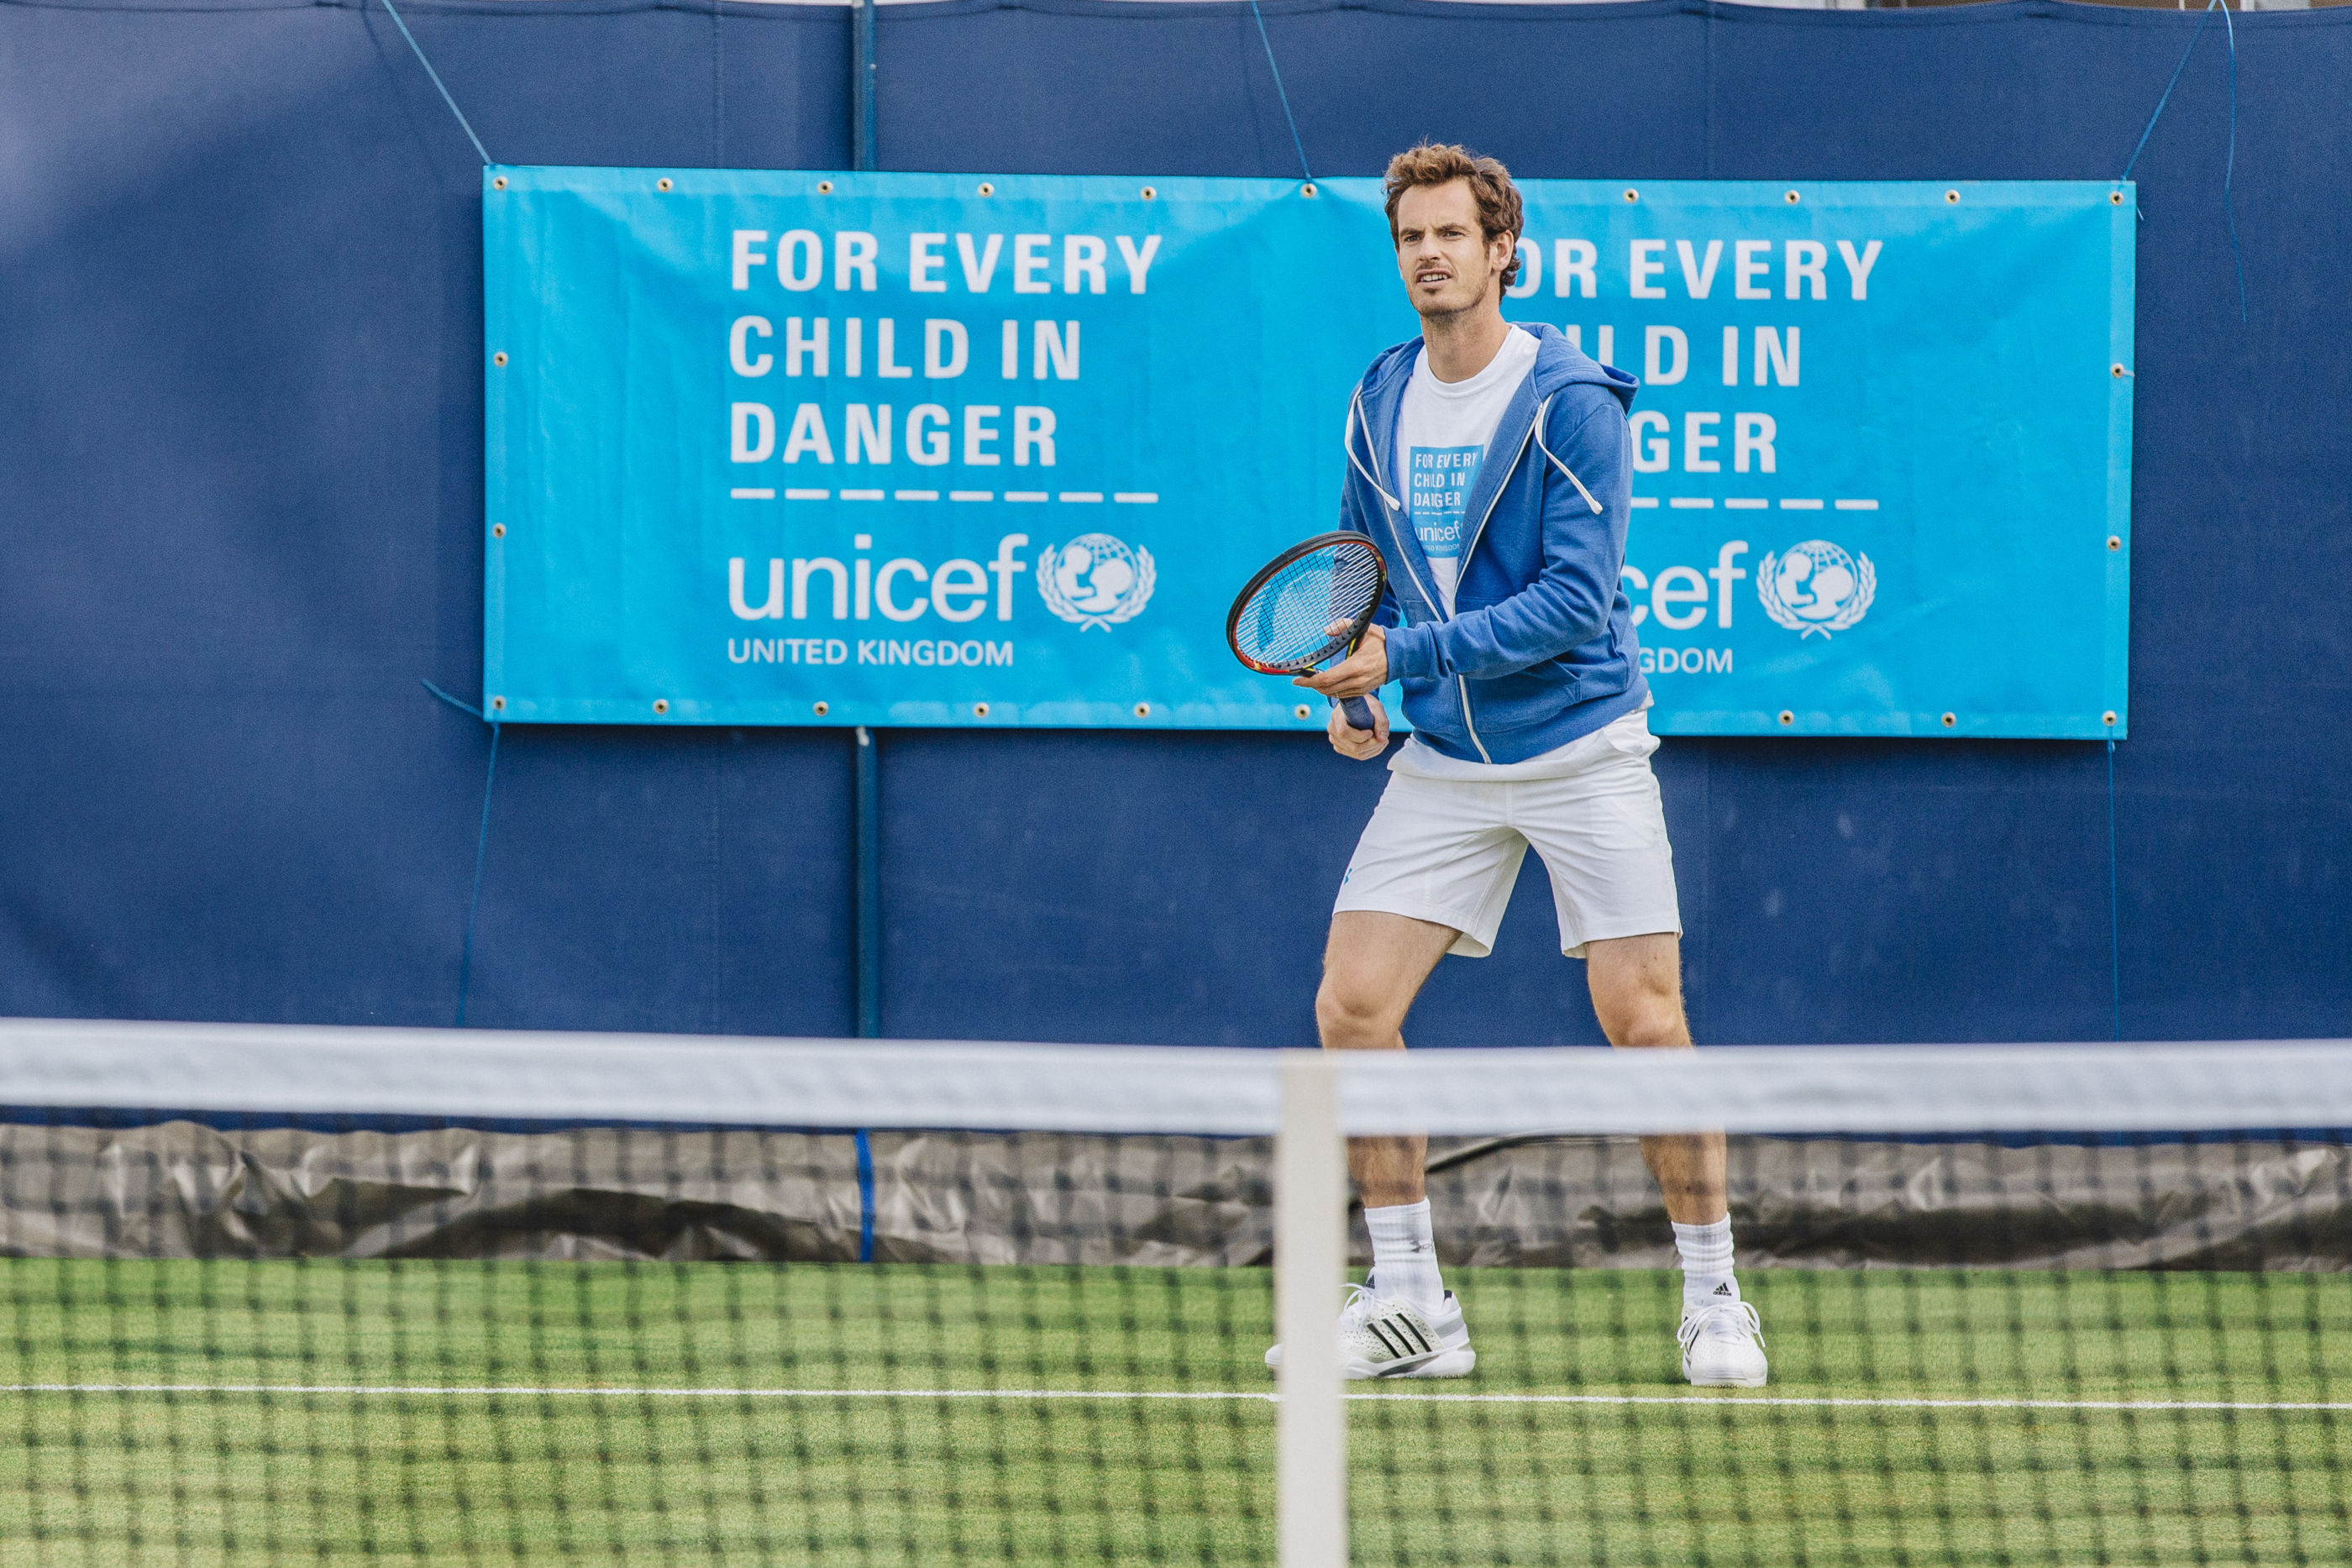 Tiebreak Tennis on X: A classy move, @andy_murray 👏🙏 #andymurray #murray  #tiebreaktennis #UkraineRussianWar #Ukraine @UNICEF @UNICEFCZ #UNICEF   / X